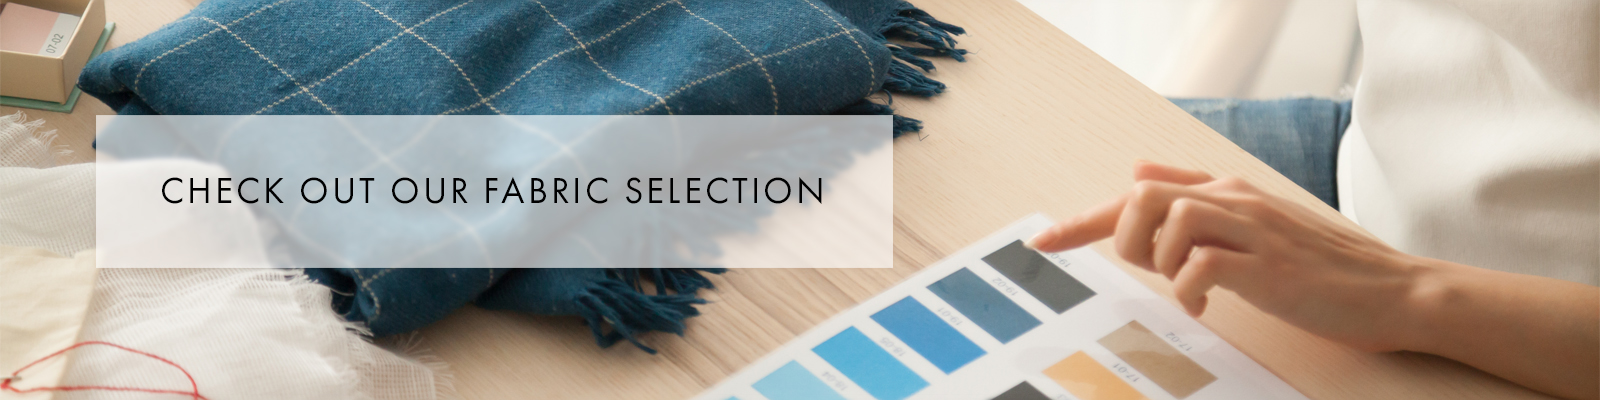 fabric selection